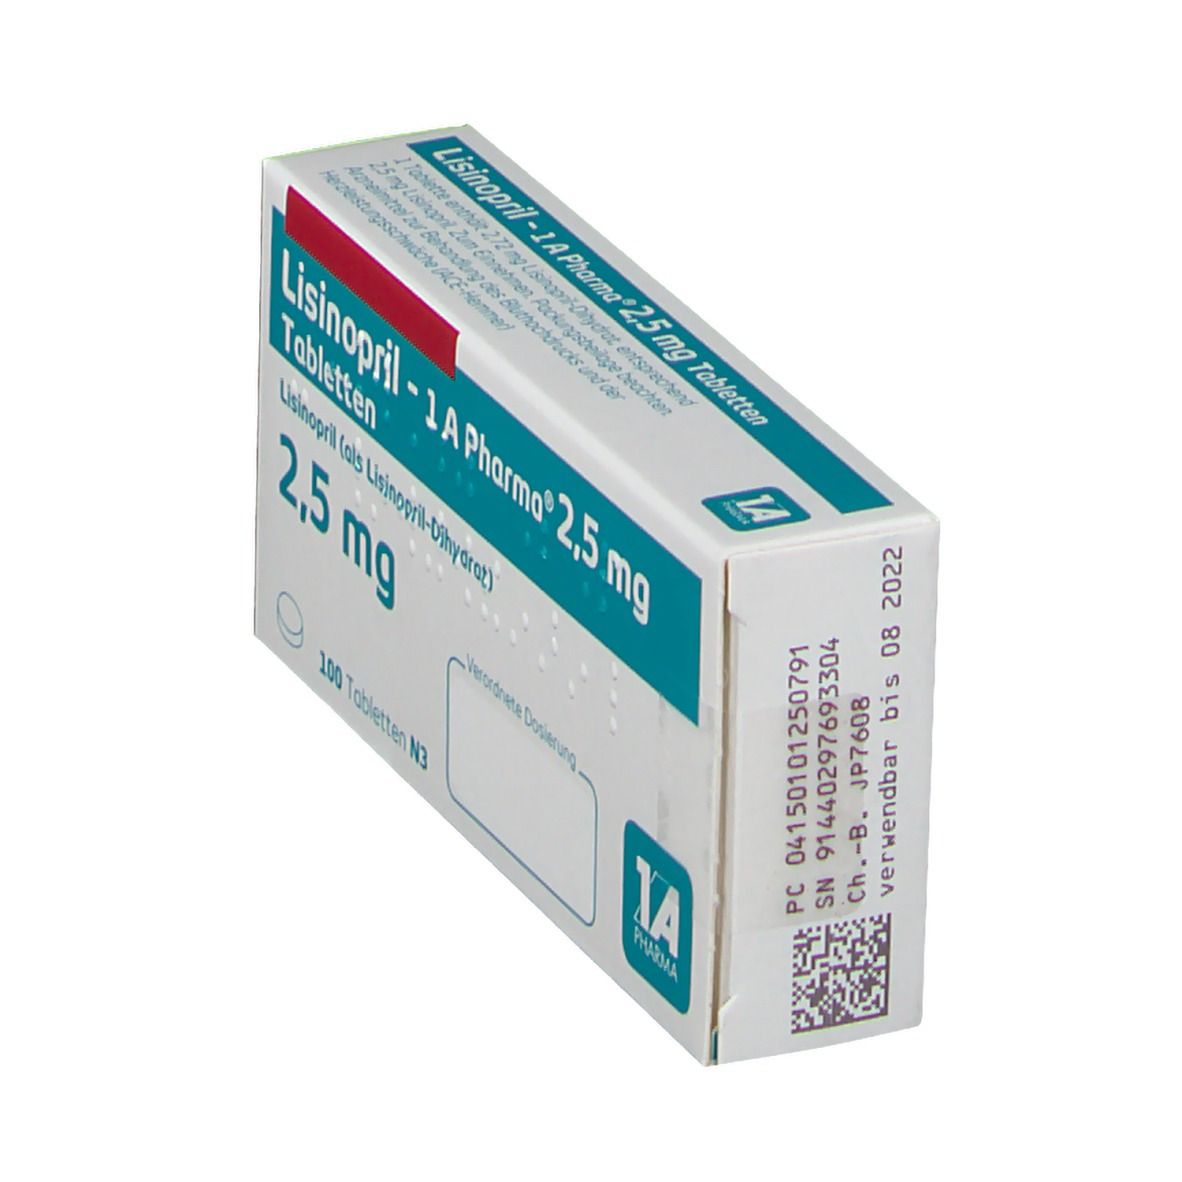 Lisinopril - 1 A Pharma® 2,5 mg